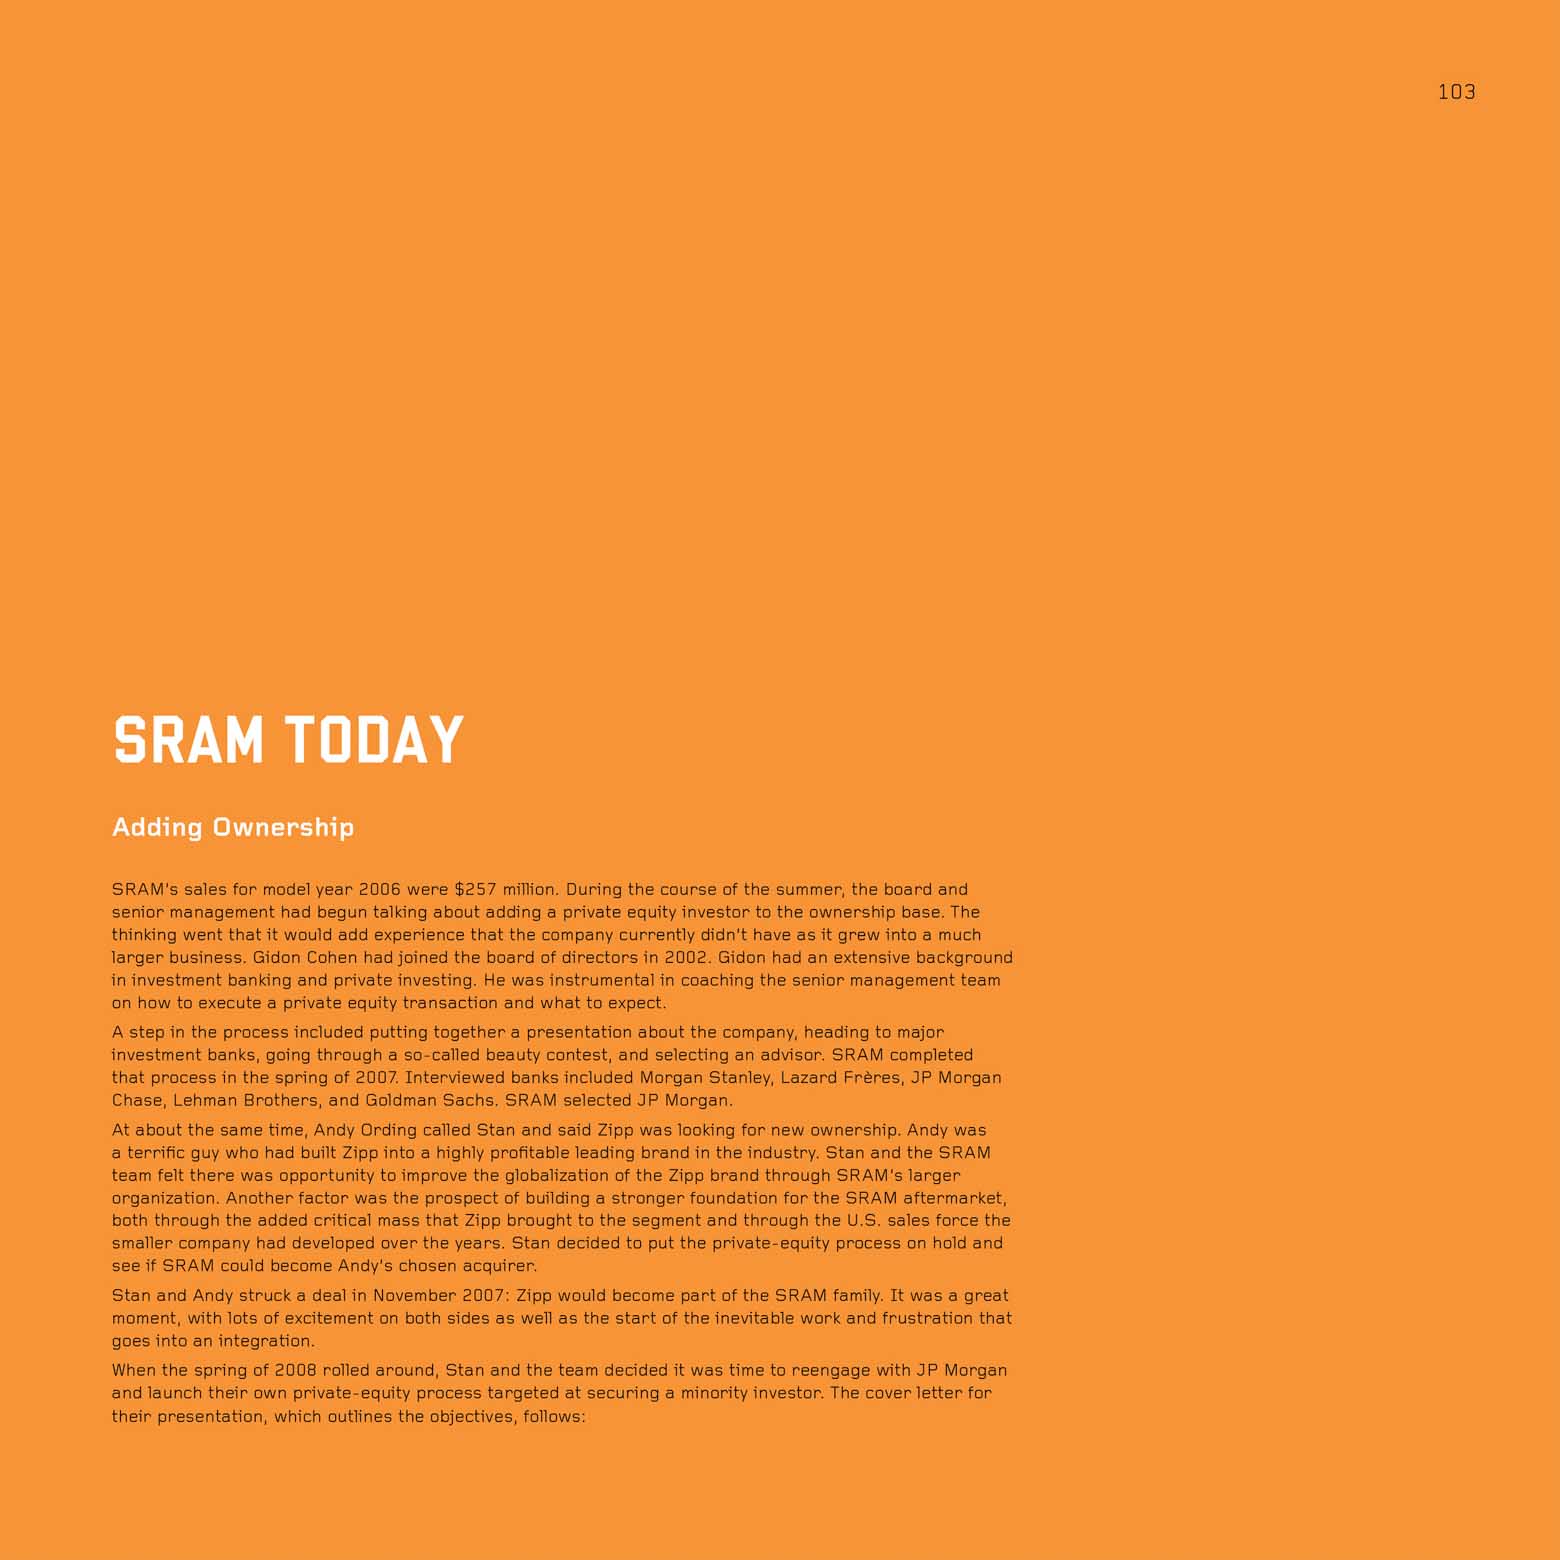 SRAM 25th Anniversary page 103 main image